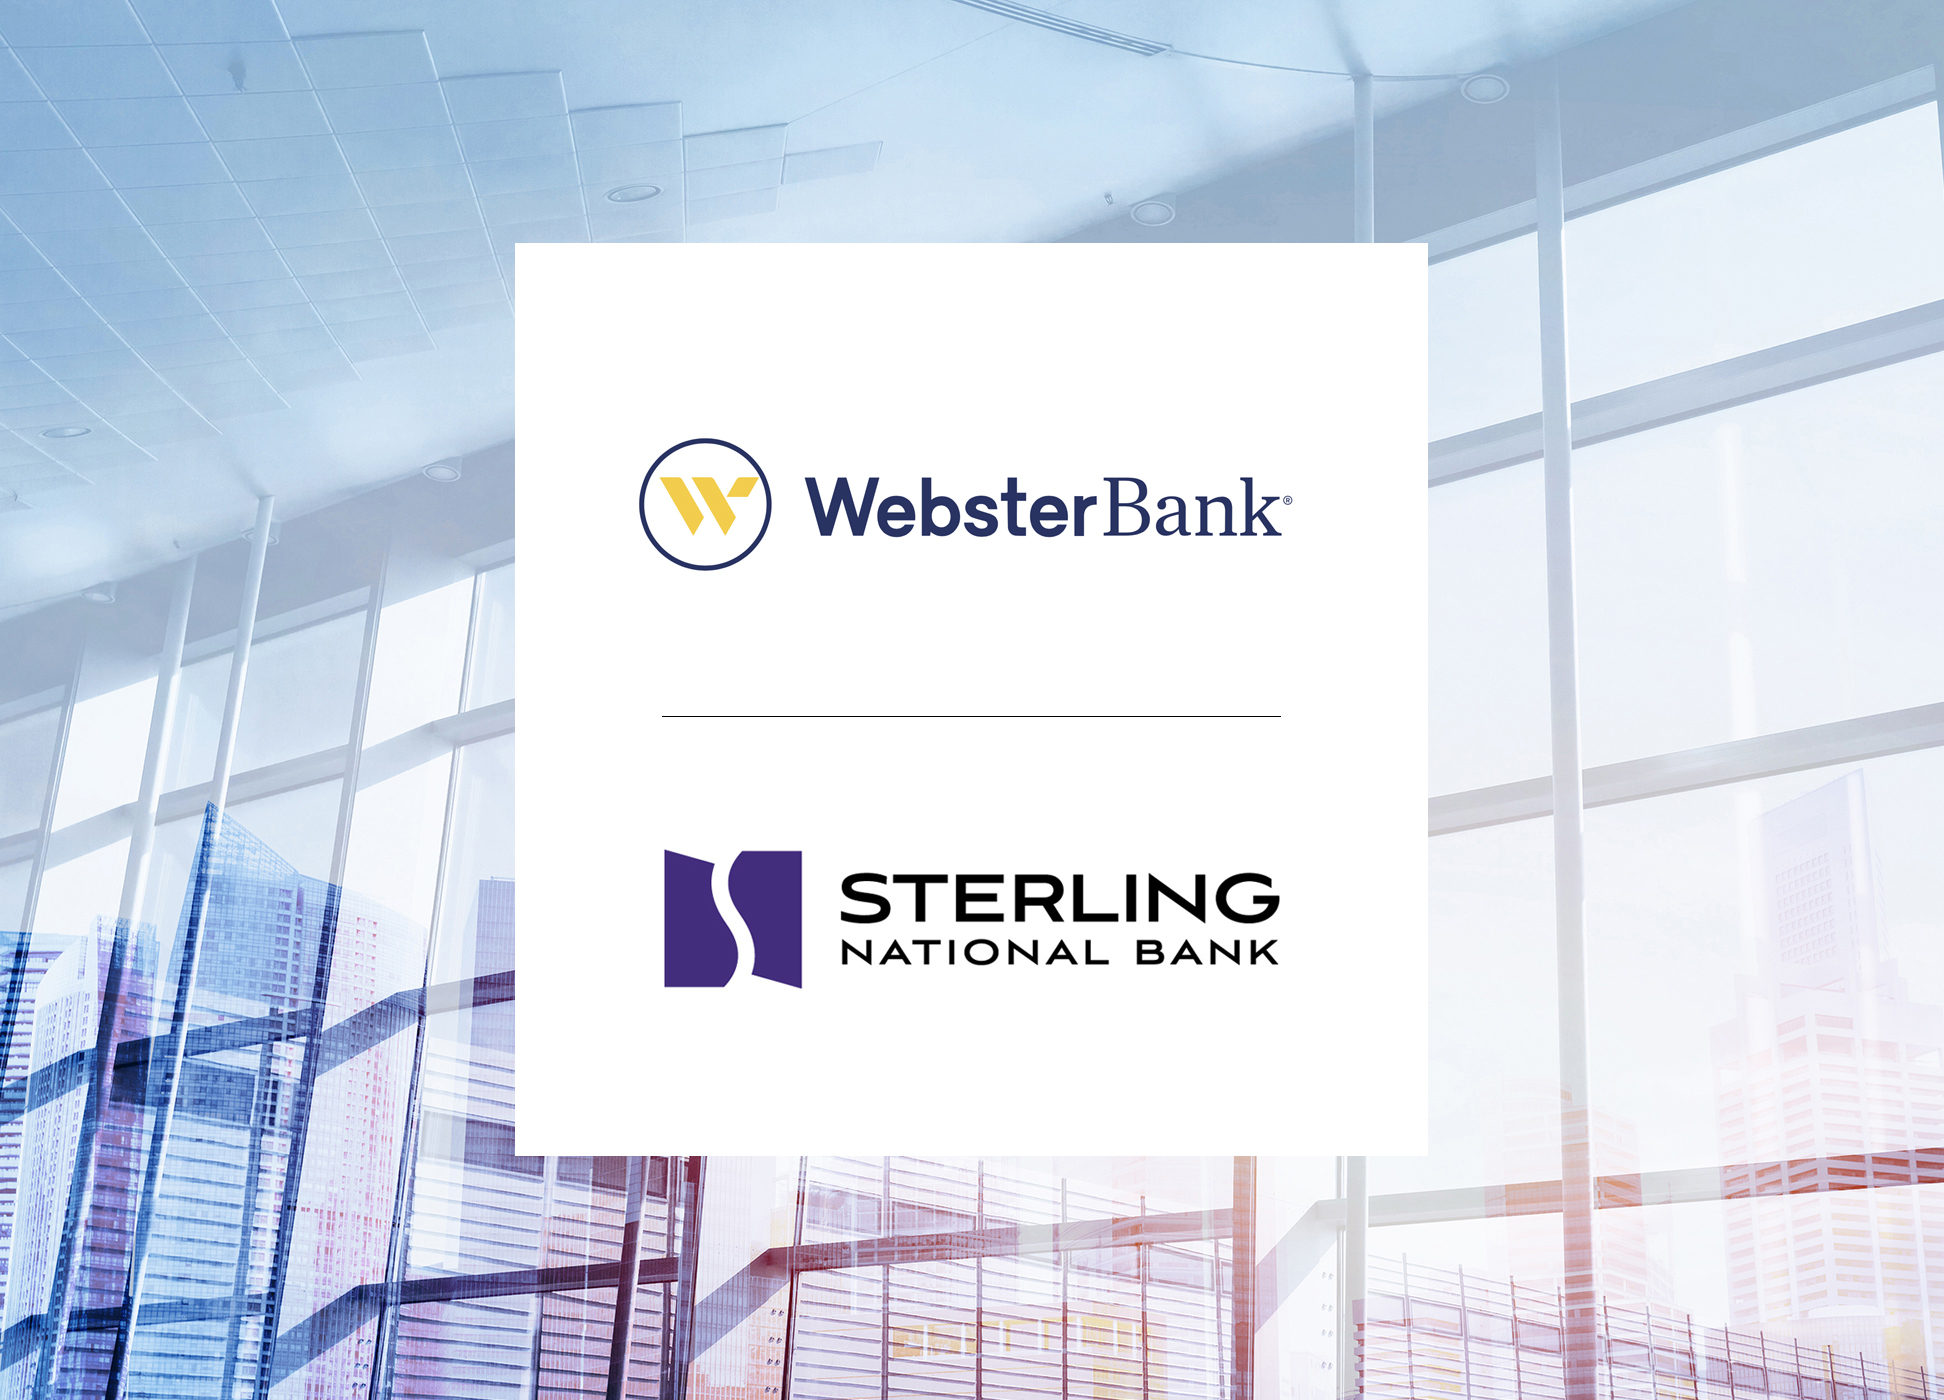 sterling national bank and webster bank logos